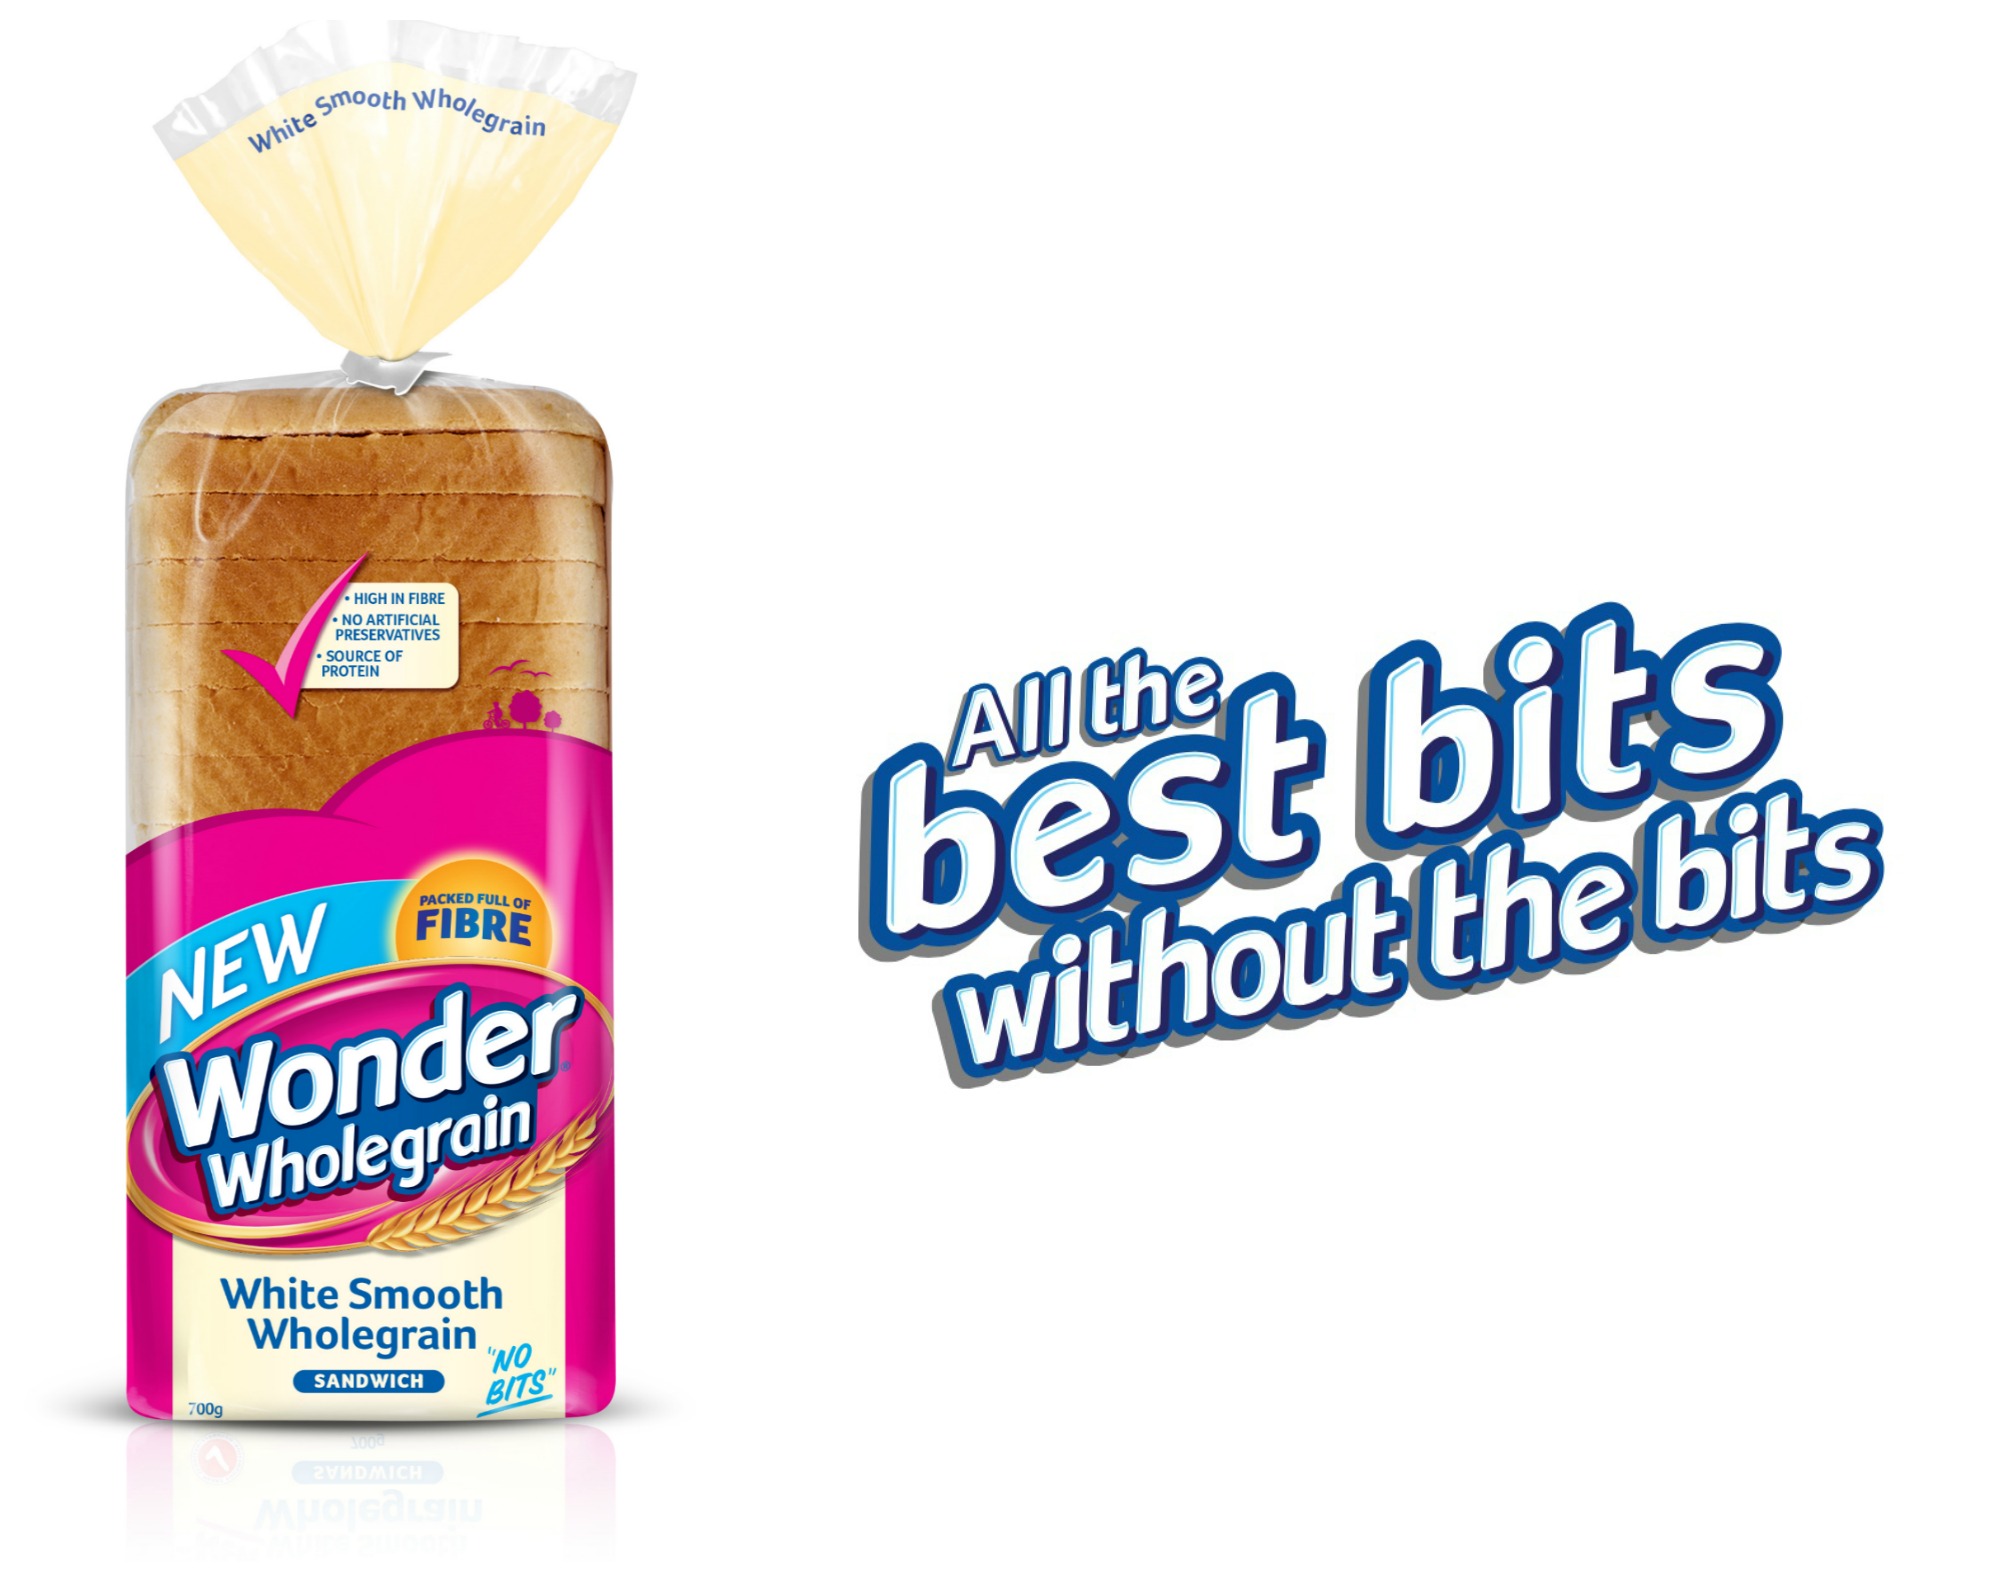 Wonder wholegrain smooth bread no bits